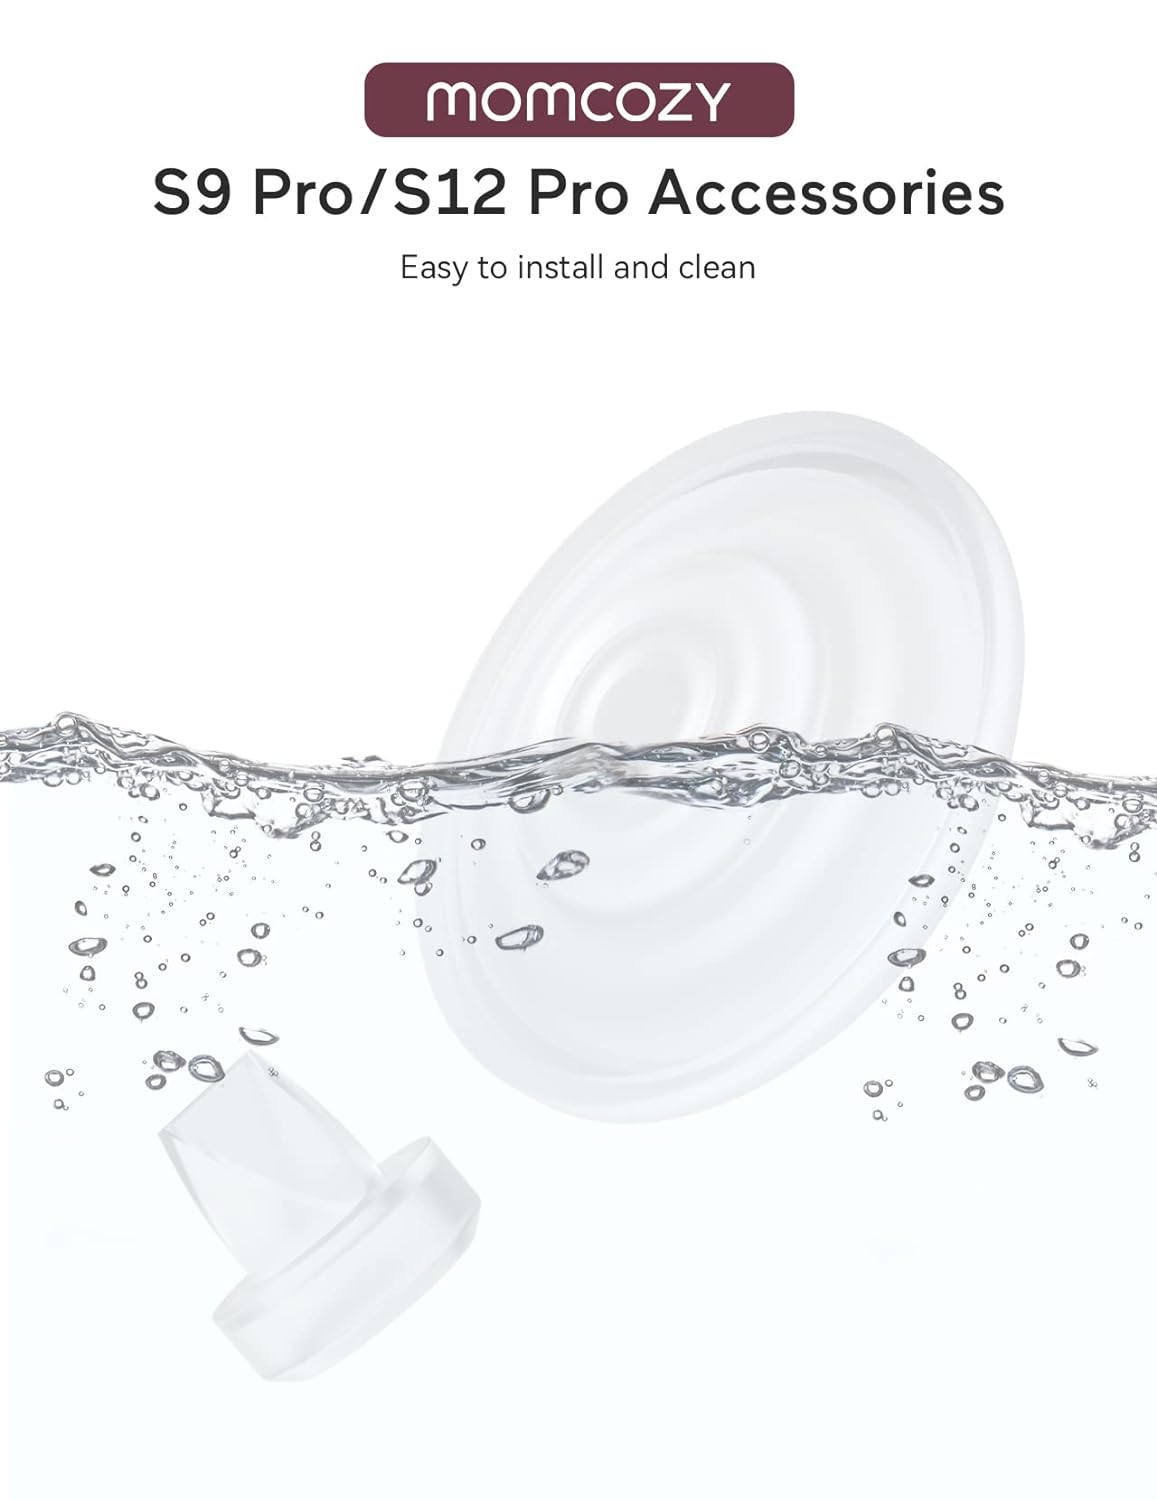 Momcozy Silicone Diaphragm + Valve  for S9 Pro/S12 Pro